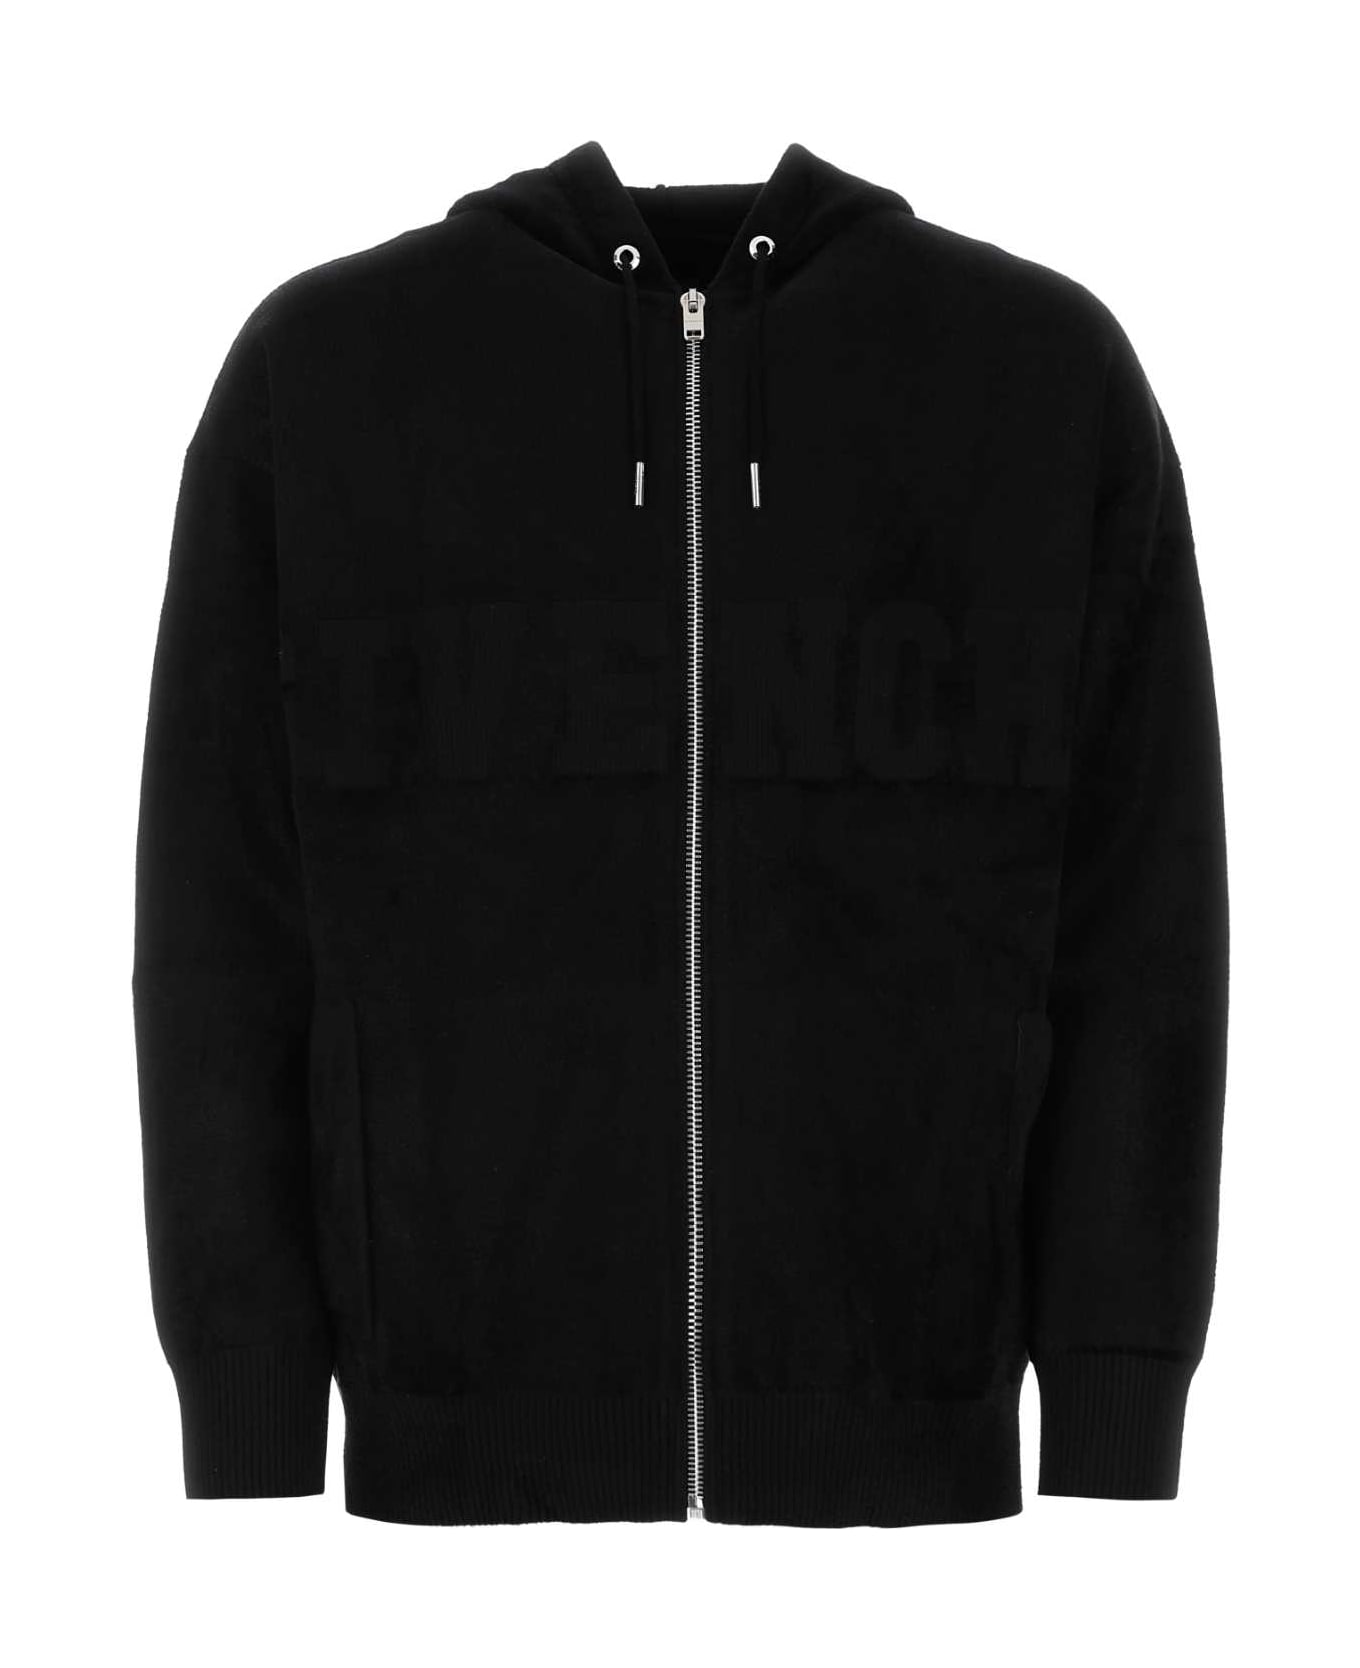 Givenchy Black Viscose Blend Oversize Sweatshirt - 001 フリース